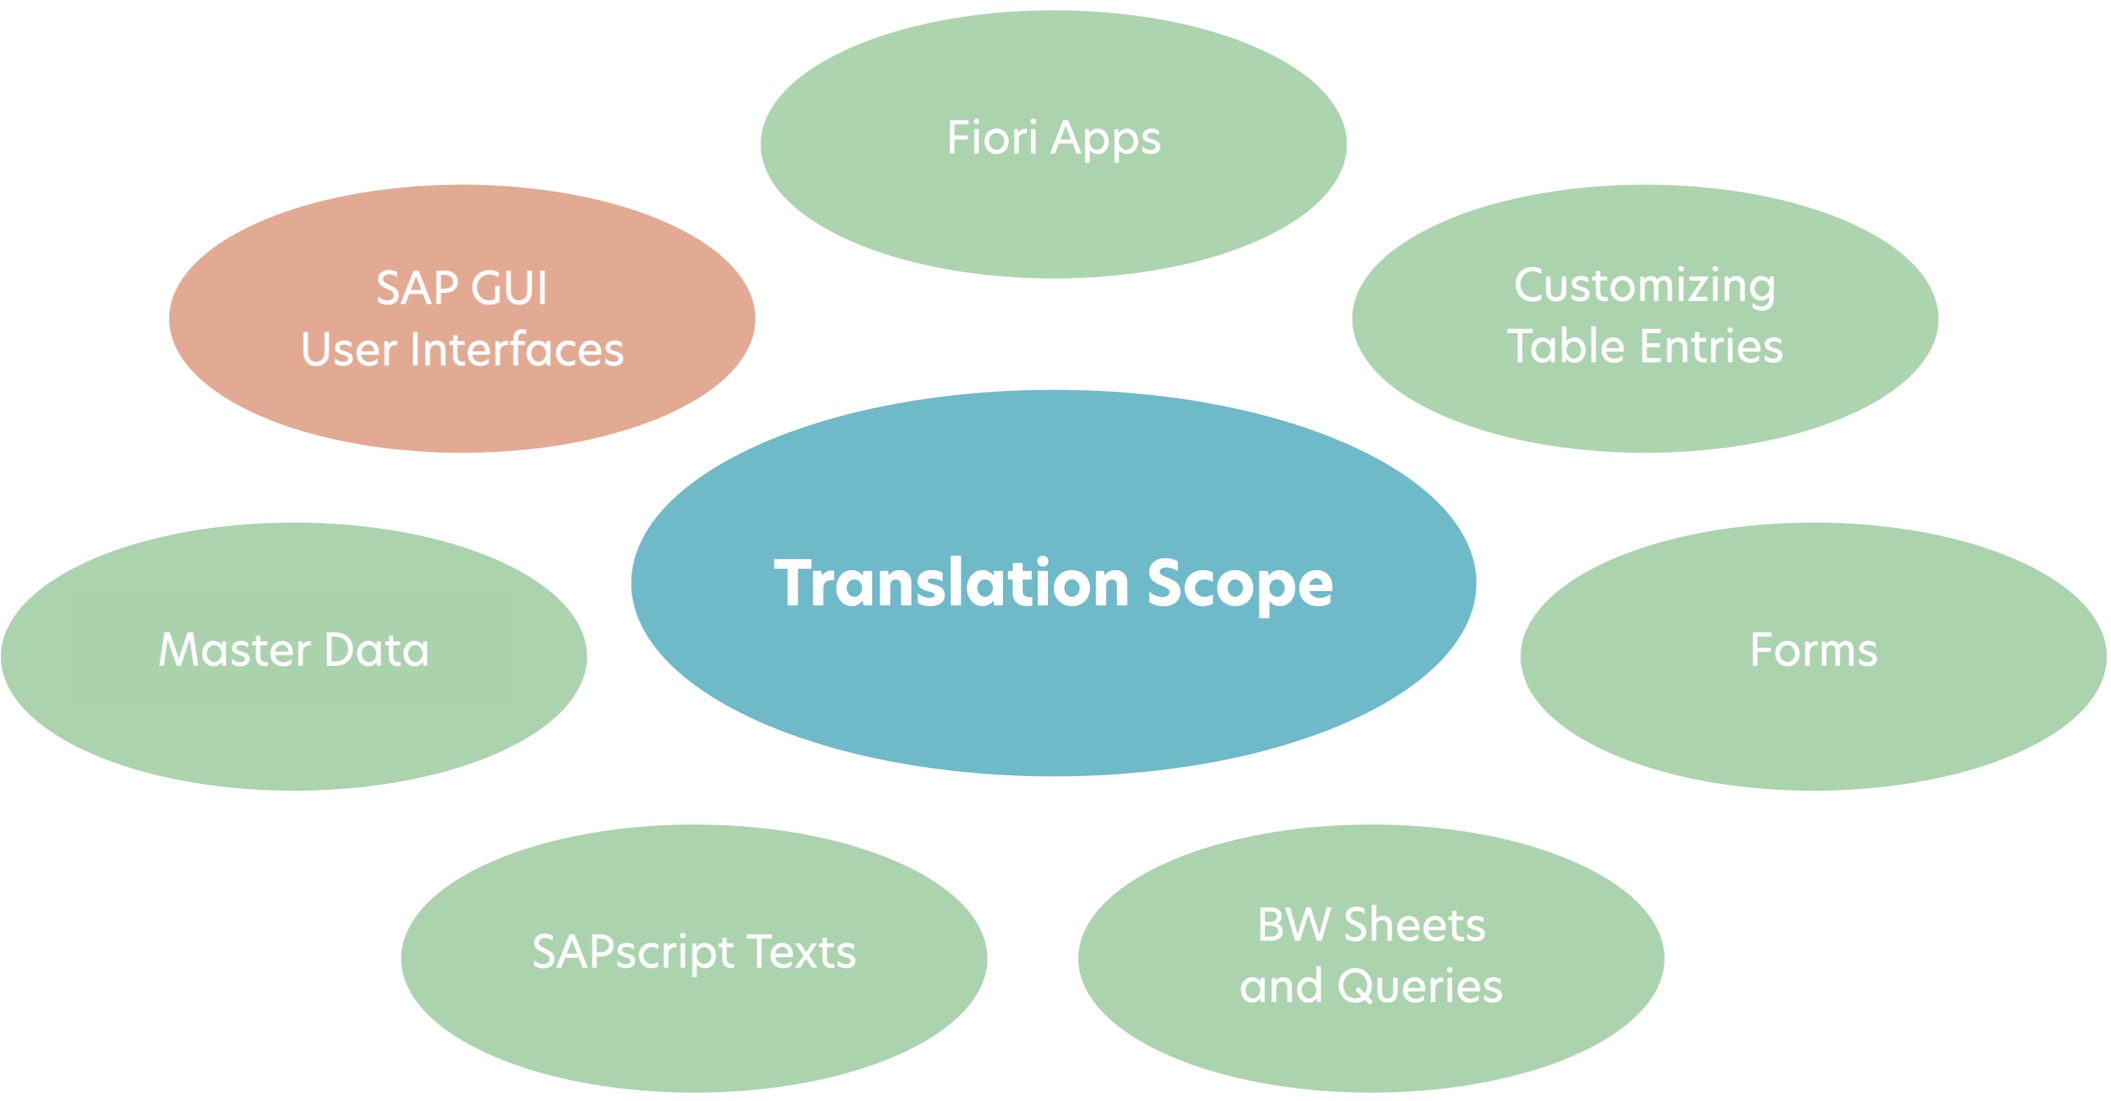 Defining the translation scope for SAP GUI UI